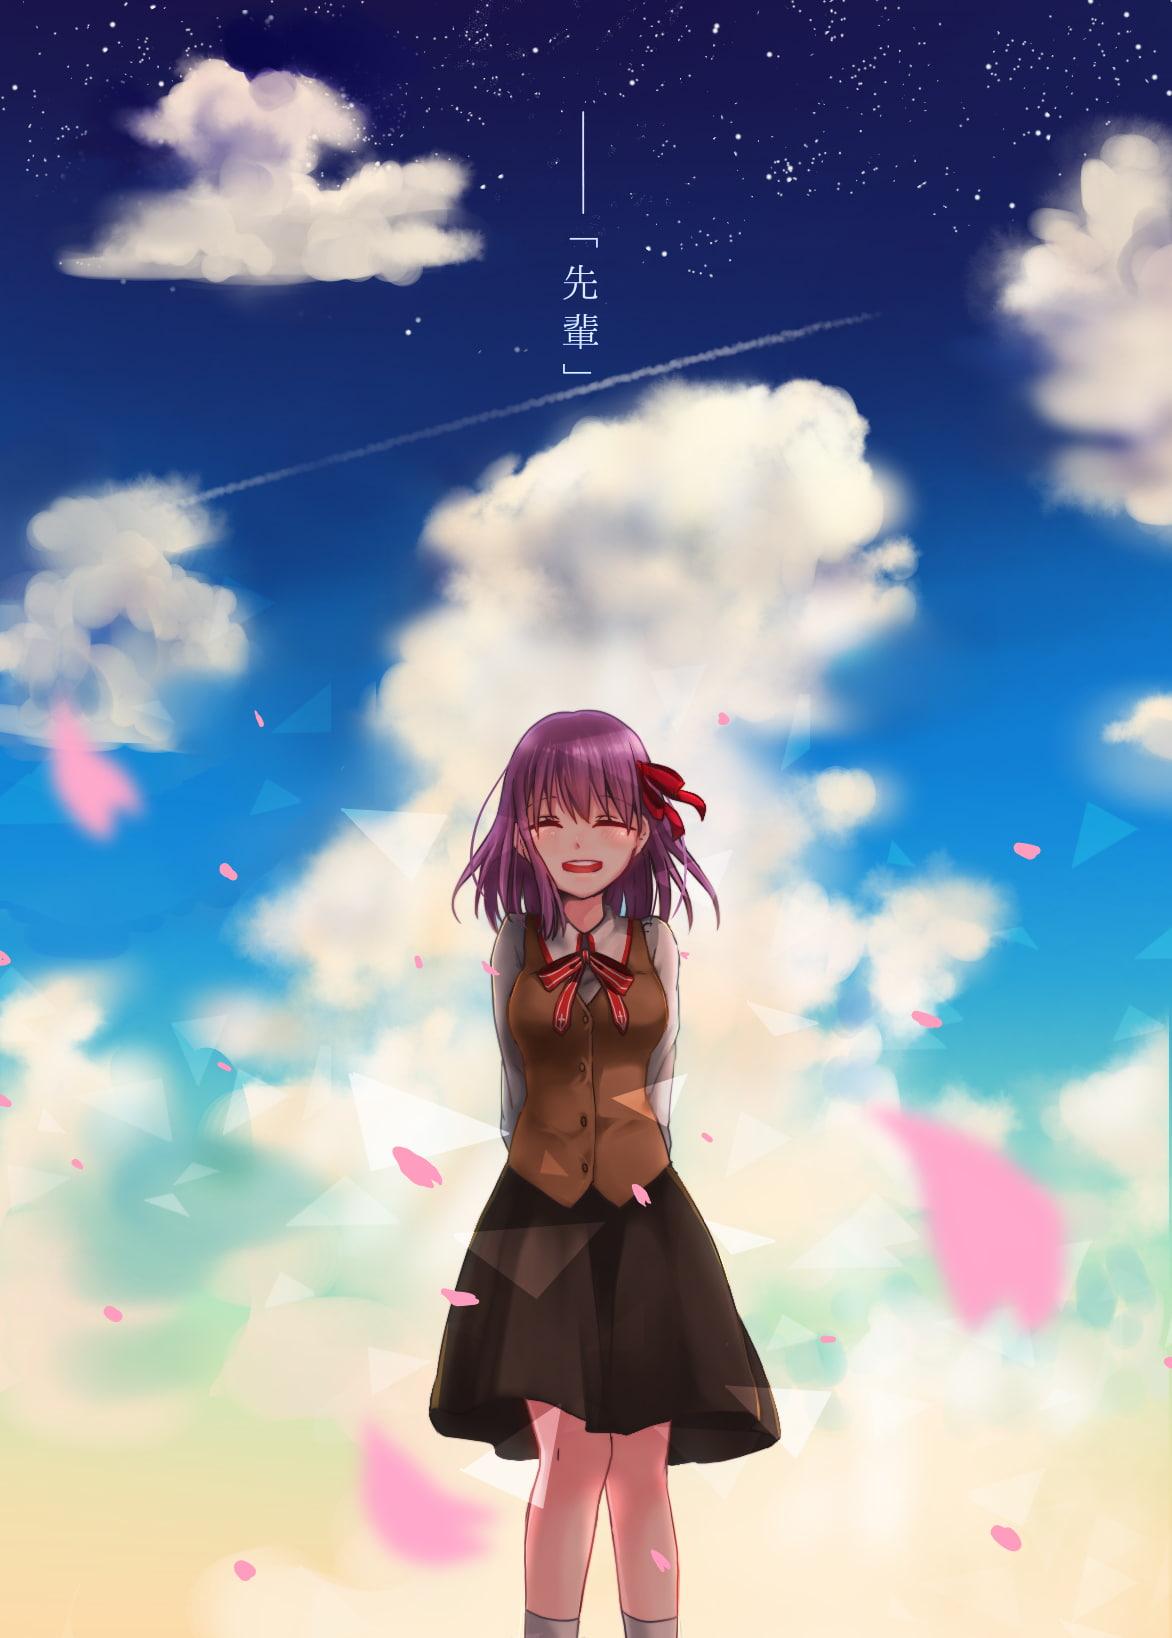 HD Wallpaper: Fate Series, Fate Stay Night, Anime Girls, Sakura